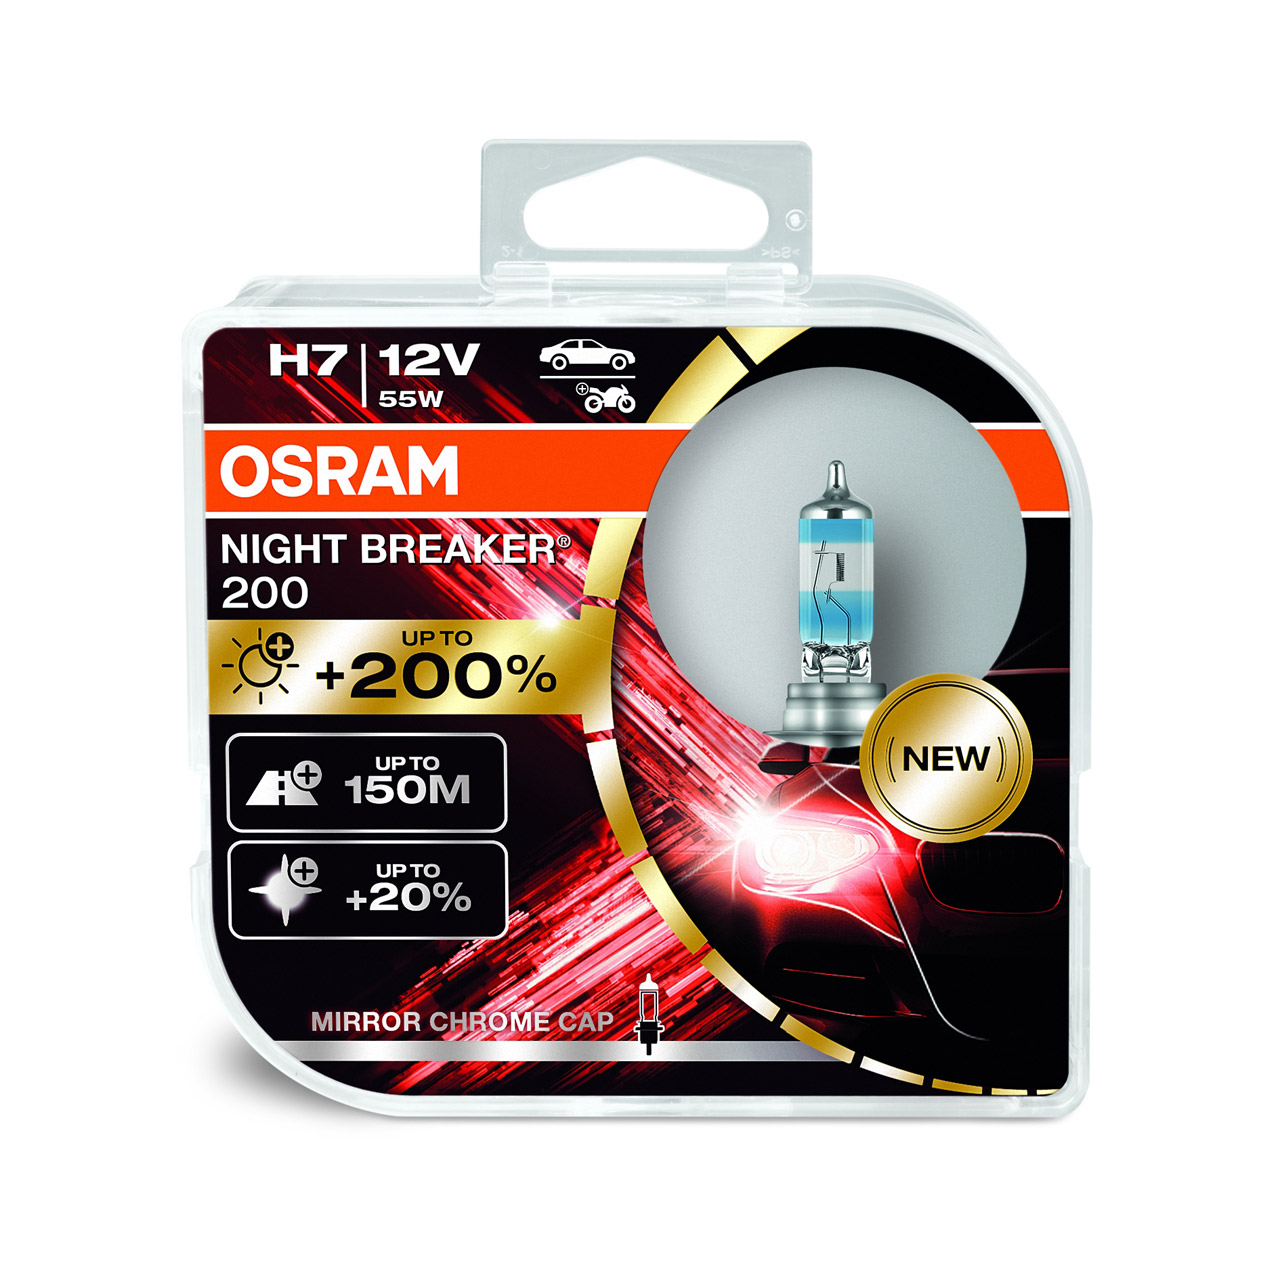 2x OSRAM Glühlampe H7 NIGHT BREAKER 200 12V 55W PX26d + 200% (Edition 2021)